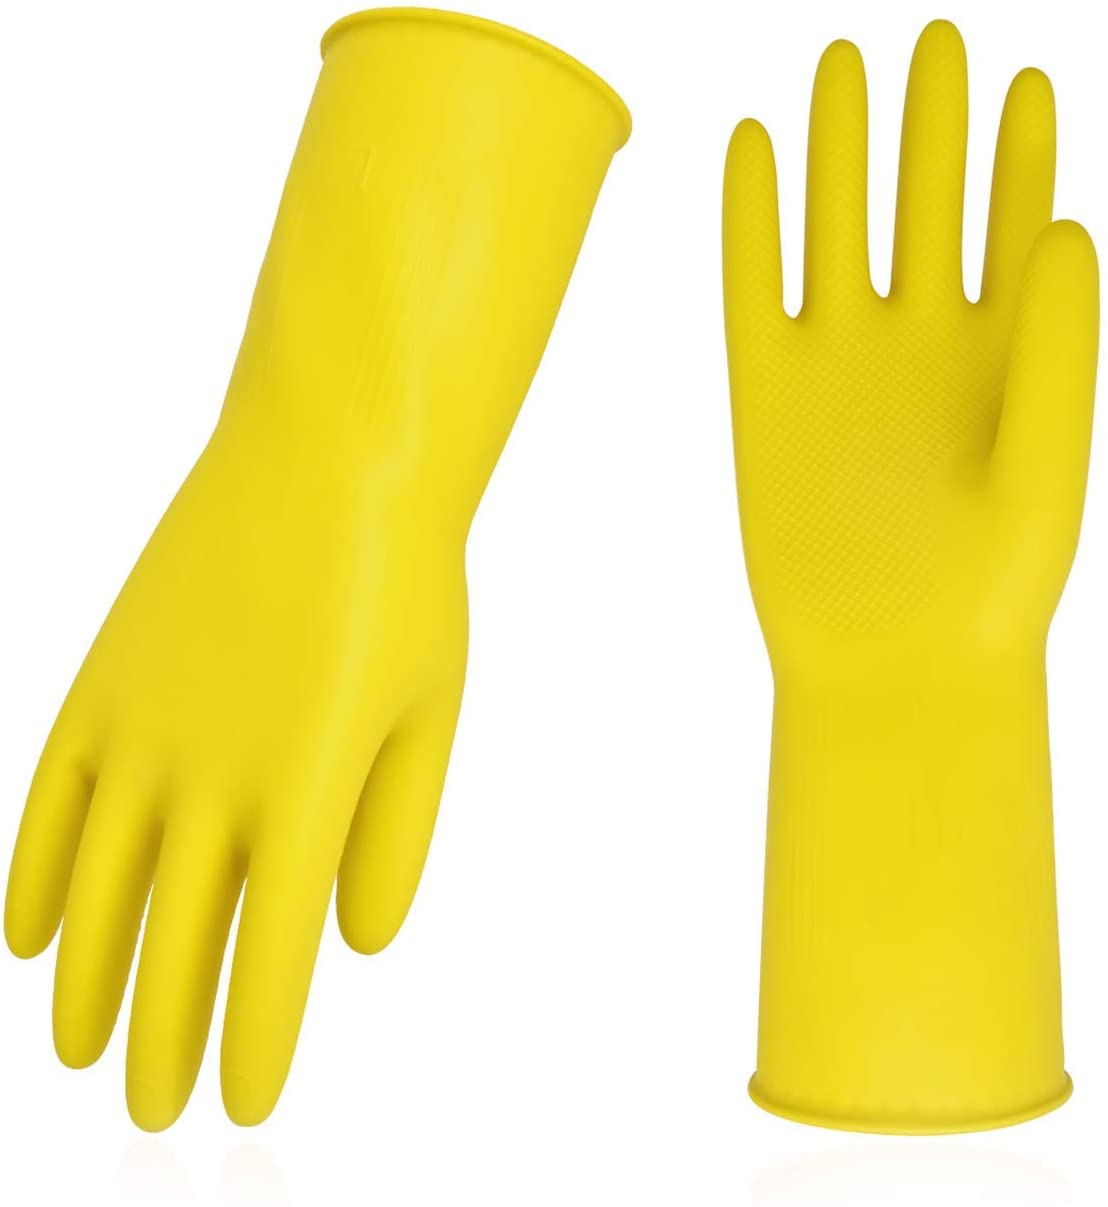 Kitchen Dishwashing Glove Random Color Reusable Rubber Gloves YUEMING 3-Pairs Waterproof Dishwashing Gloves Rubber Cleaning Gloves